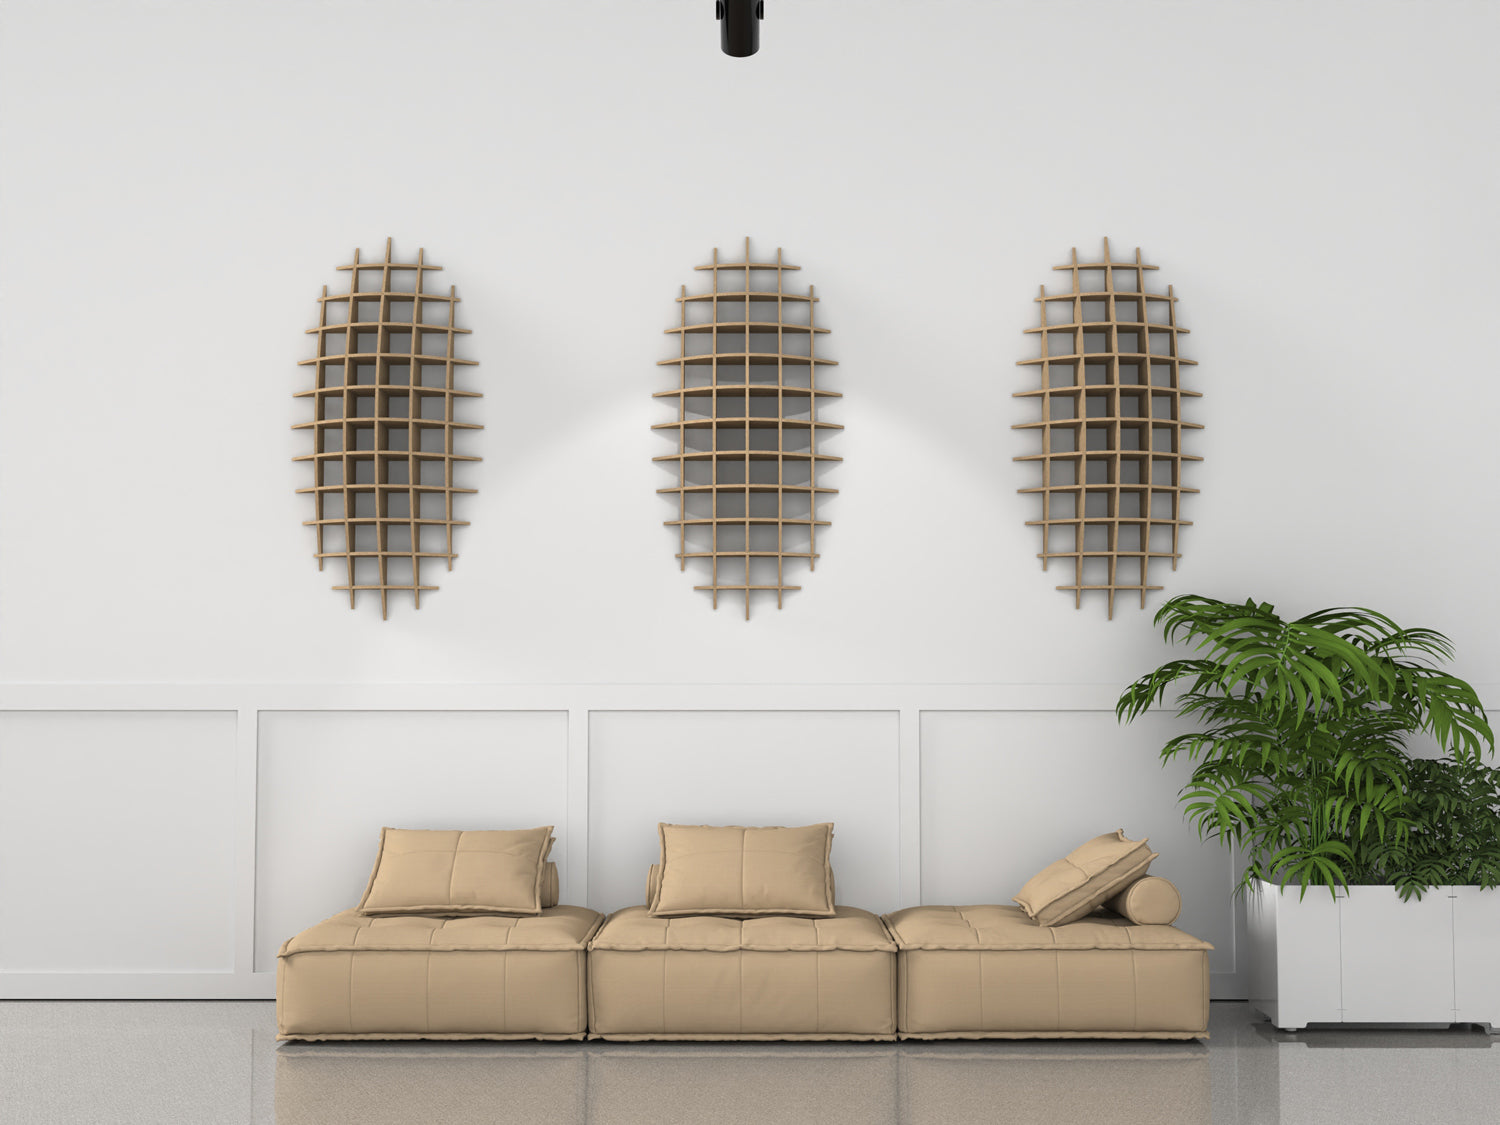 Acoustic felt 3d wall panels - dome diffuser 60"x30"x10" - room view render